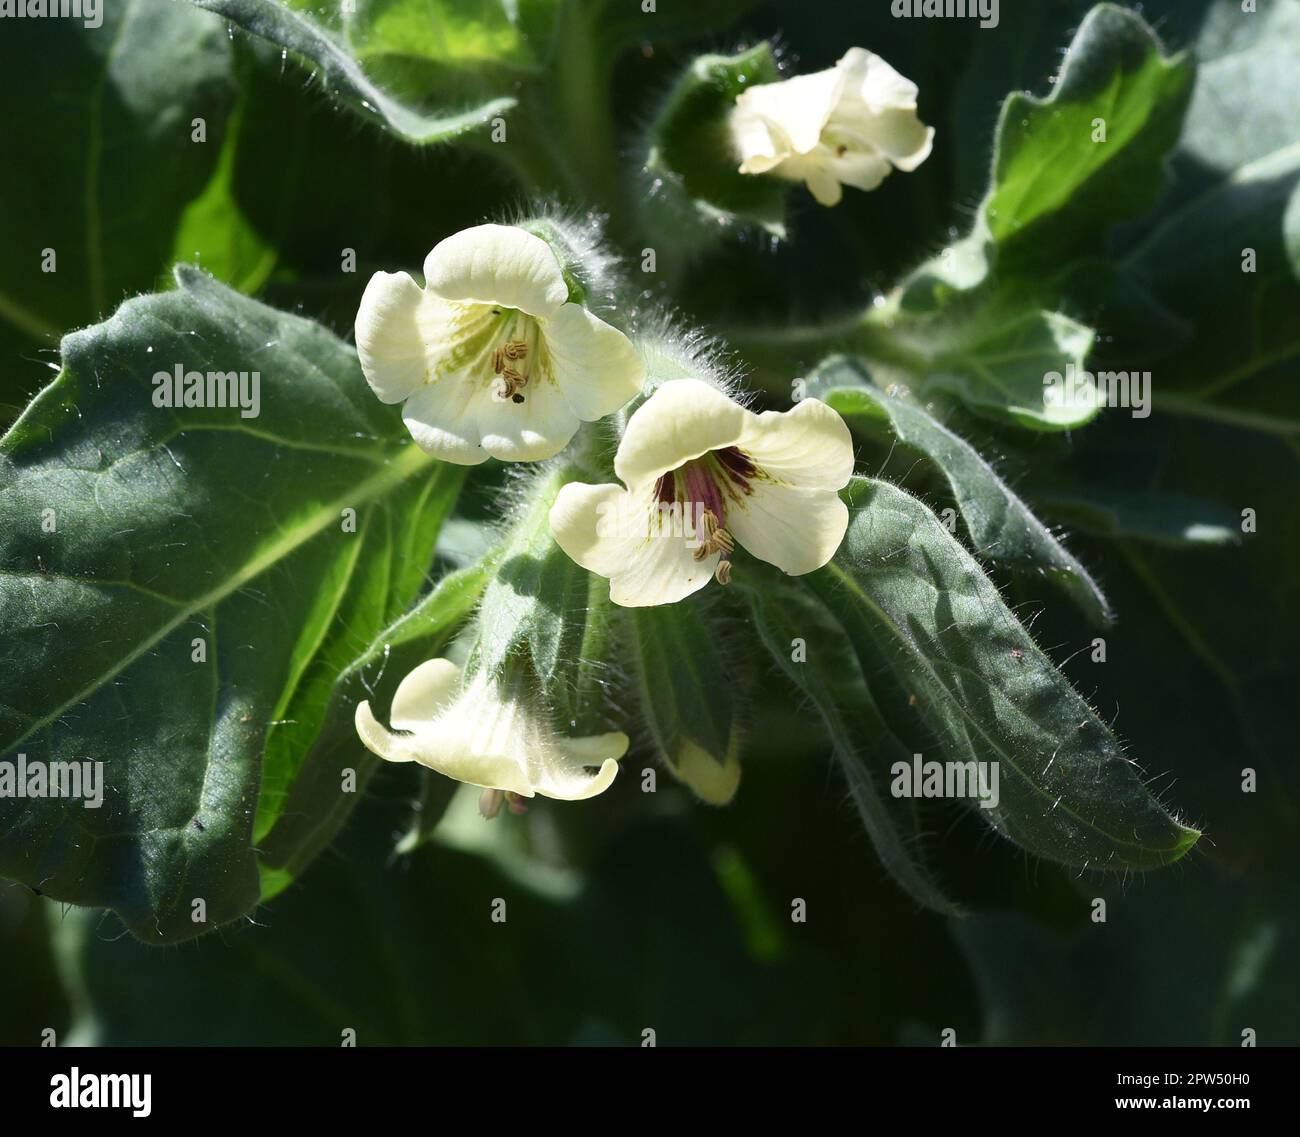 Weisses Bilsenkraut, Hyoscyamus alba ist eine wichtige, aber giftige, Heilpflanze. La henbane blanca, Hyoscyamus alba, es una medicina importante pero tóxica Foto de stock